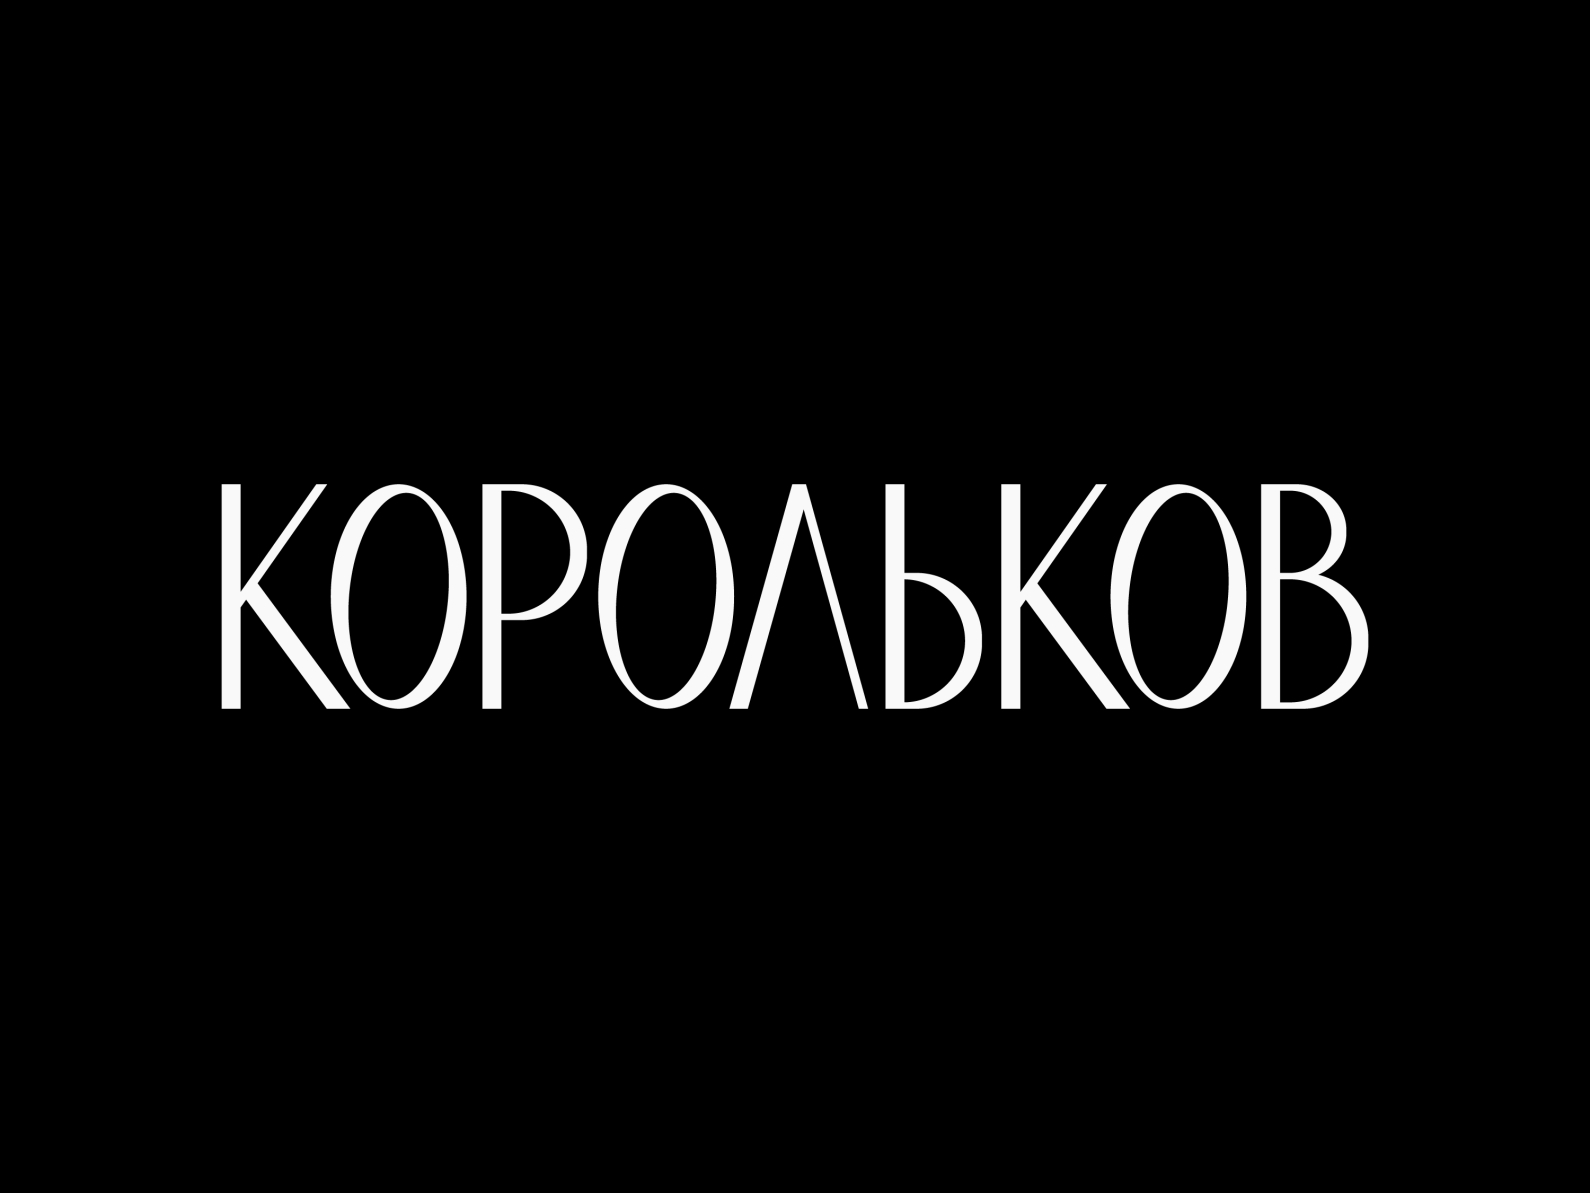 Personal logotype by MITYA KOROLKOV on Dribbble